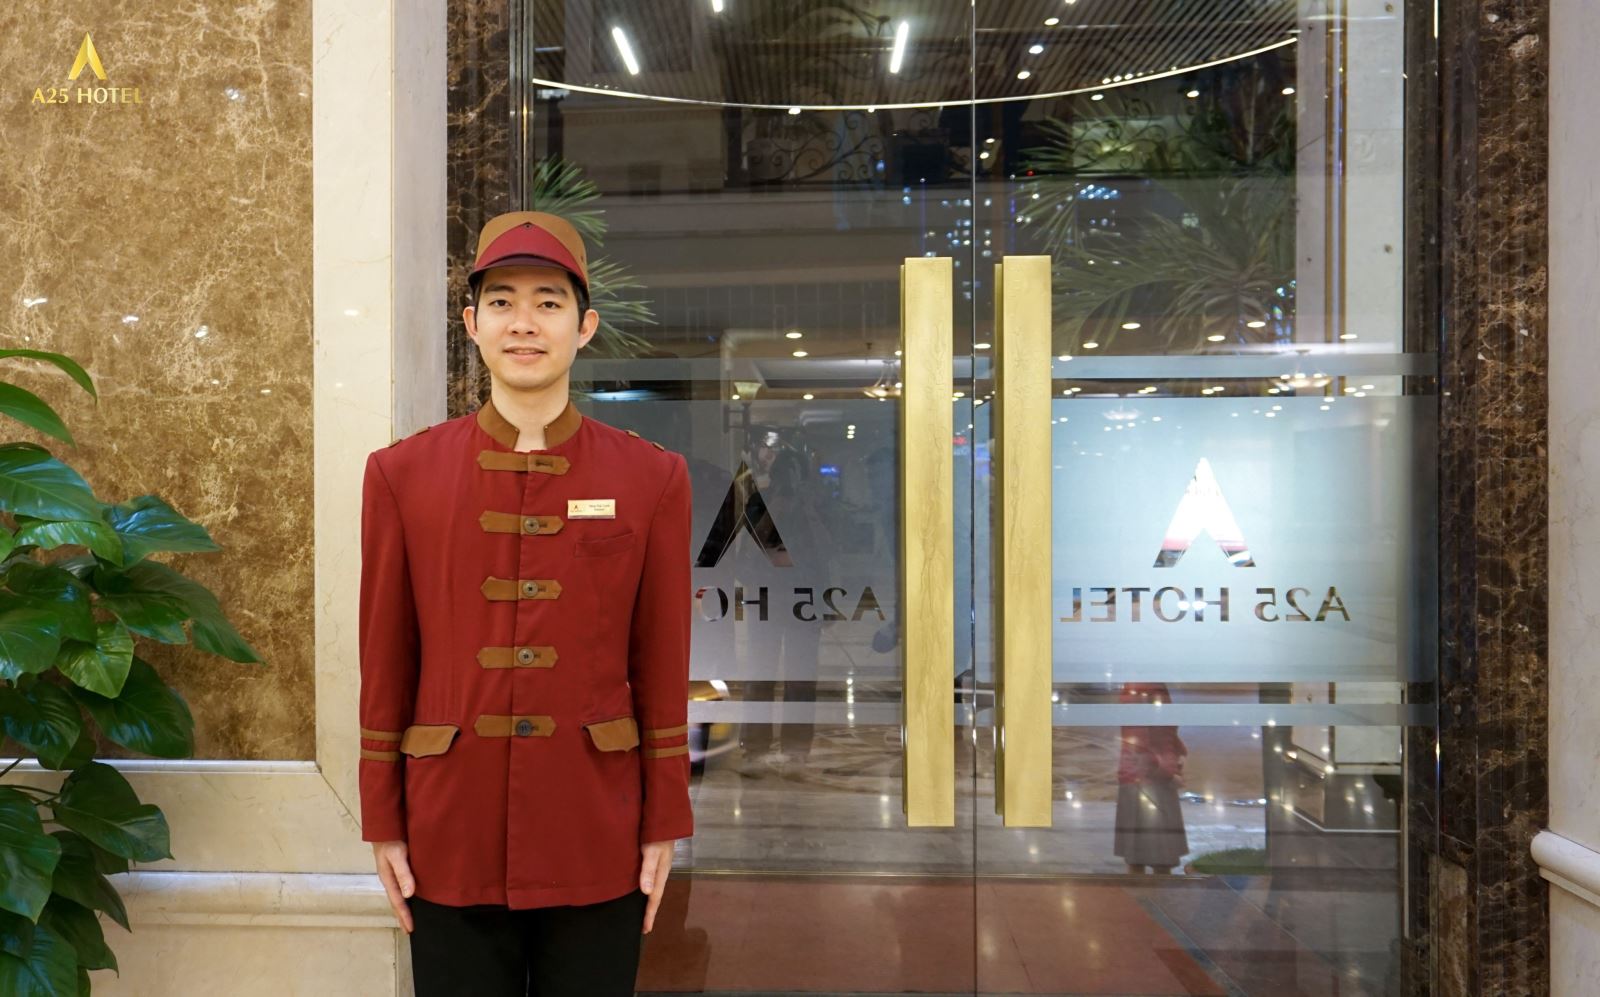 a25-hotel-whose-chance-–-viec-tot-luong-cao-co-hoi-cho-ai